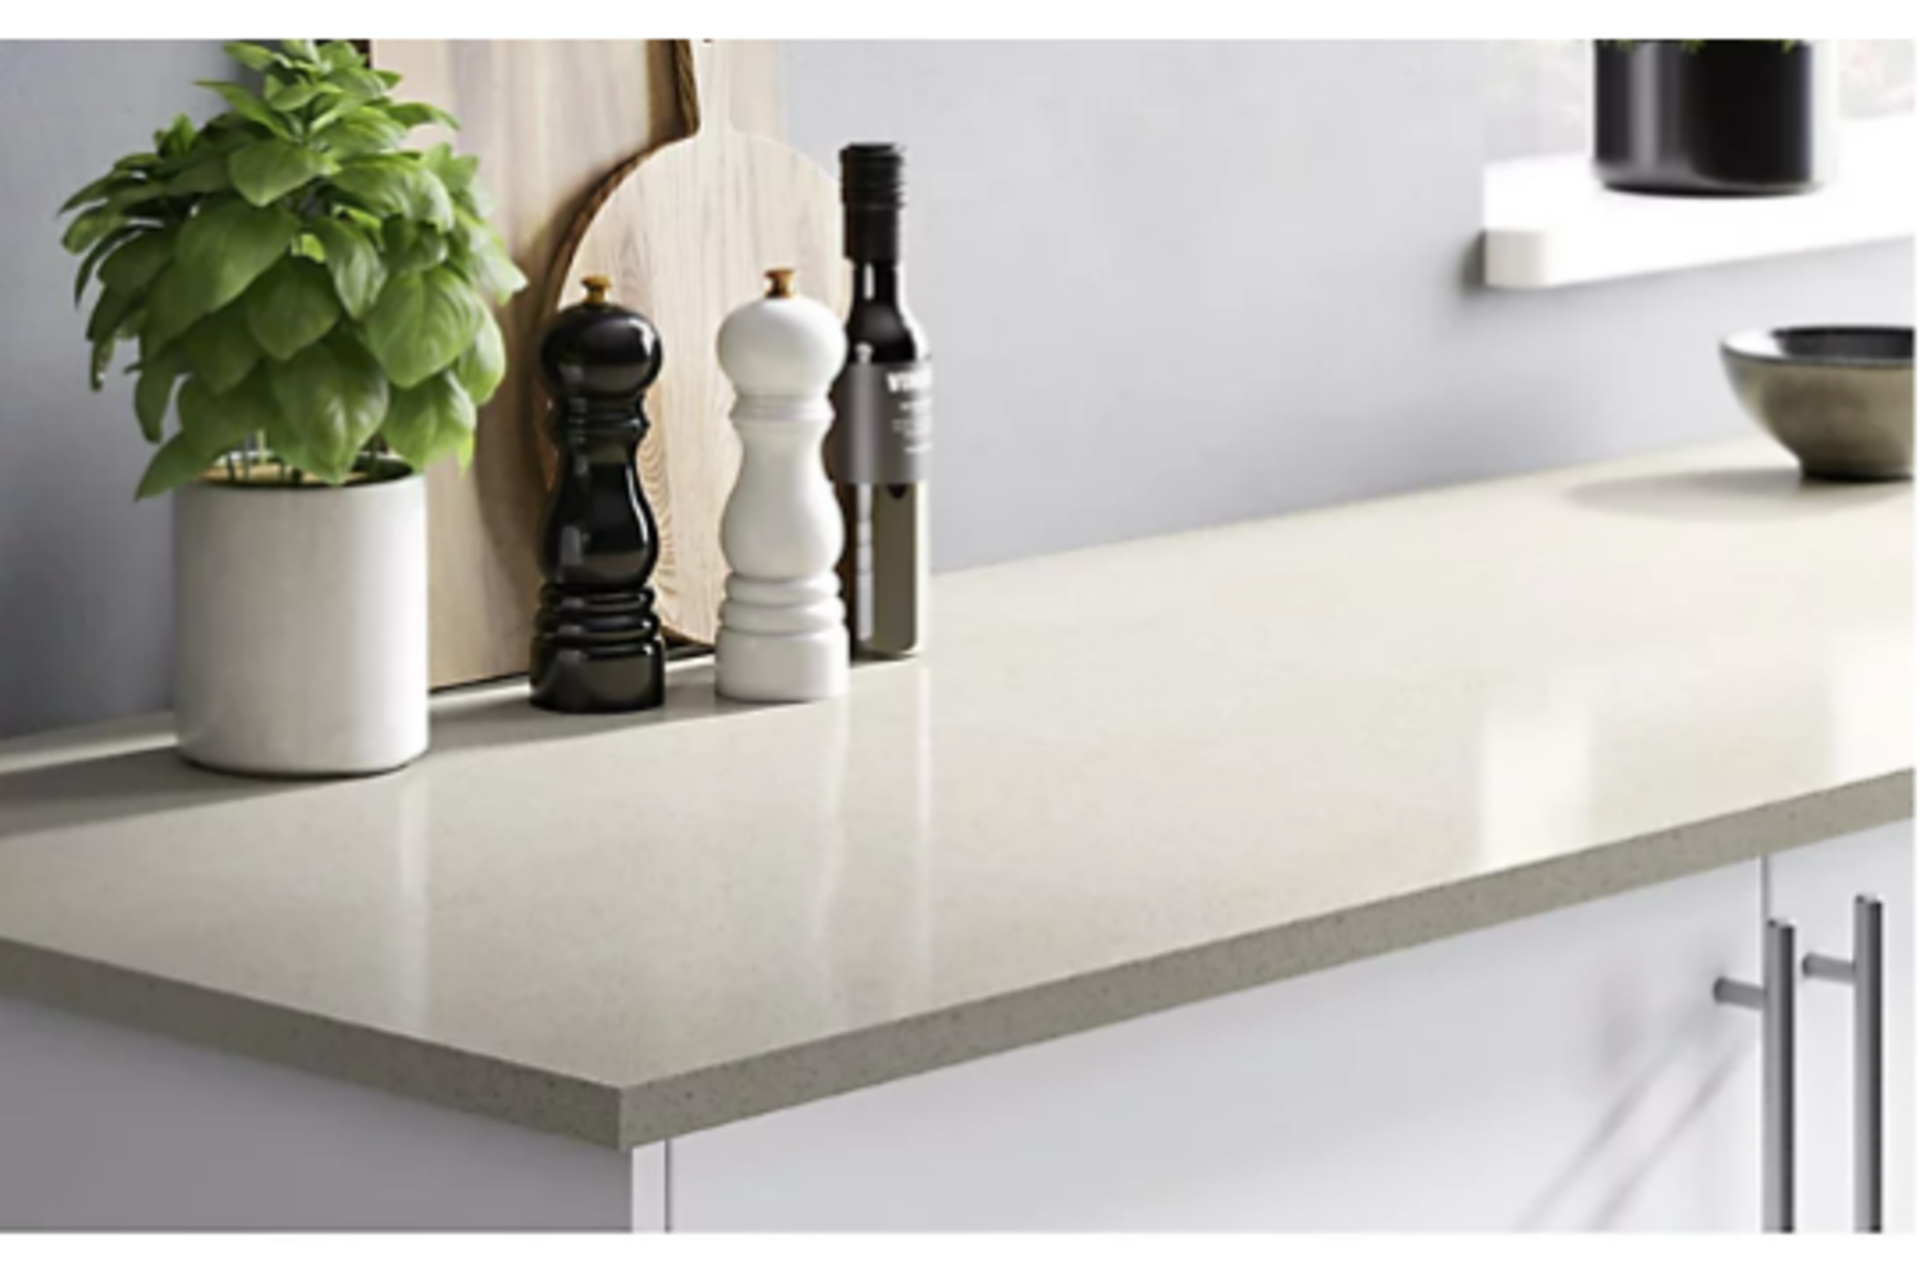 3 X New & Packaged HI-MACS 20mm Matt Sand beige Stone effect Acrylic Square edge Kitchen Worktop. - Image 4 of 4